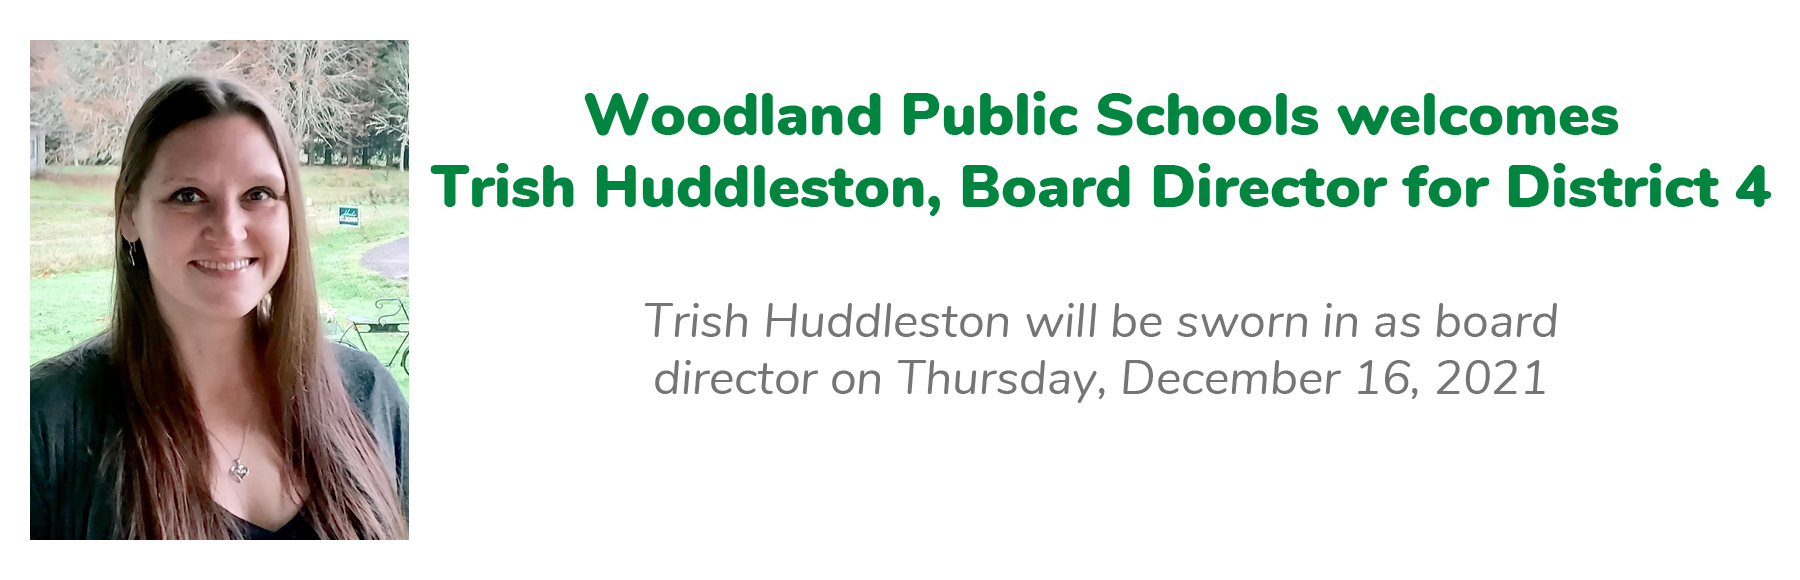  Woodland Public Schools welcomes Trish Huddleston as Director Representative for District 4 